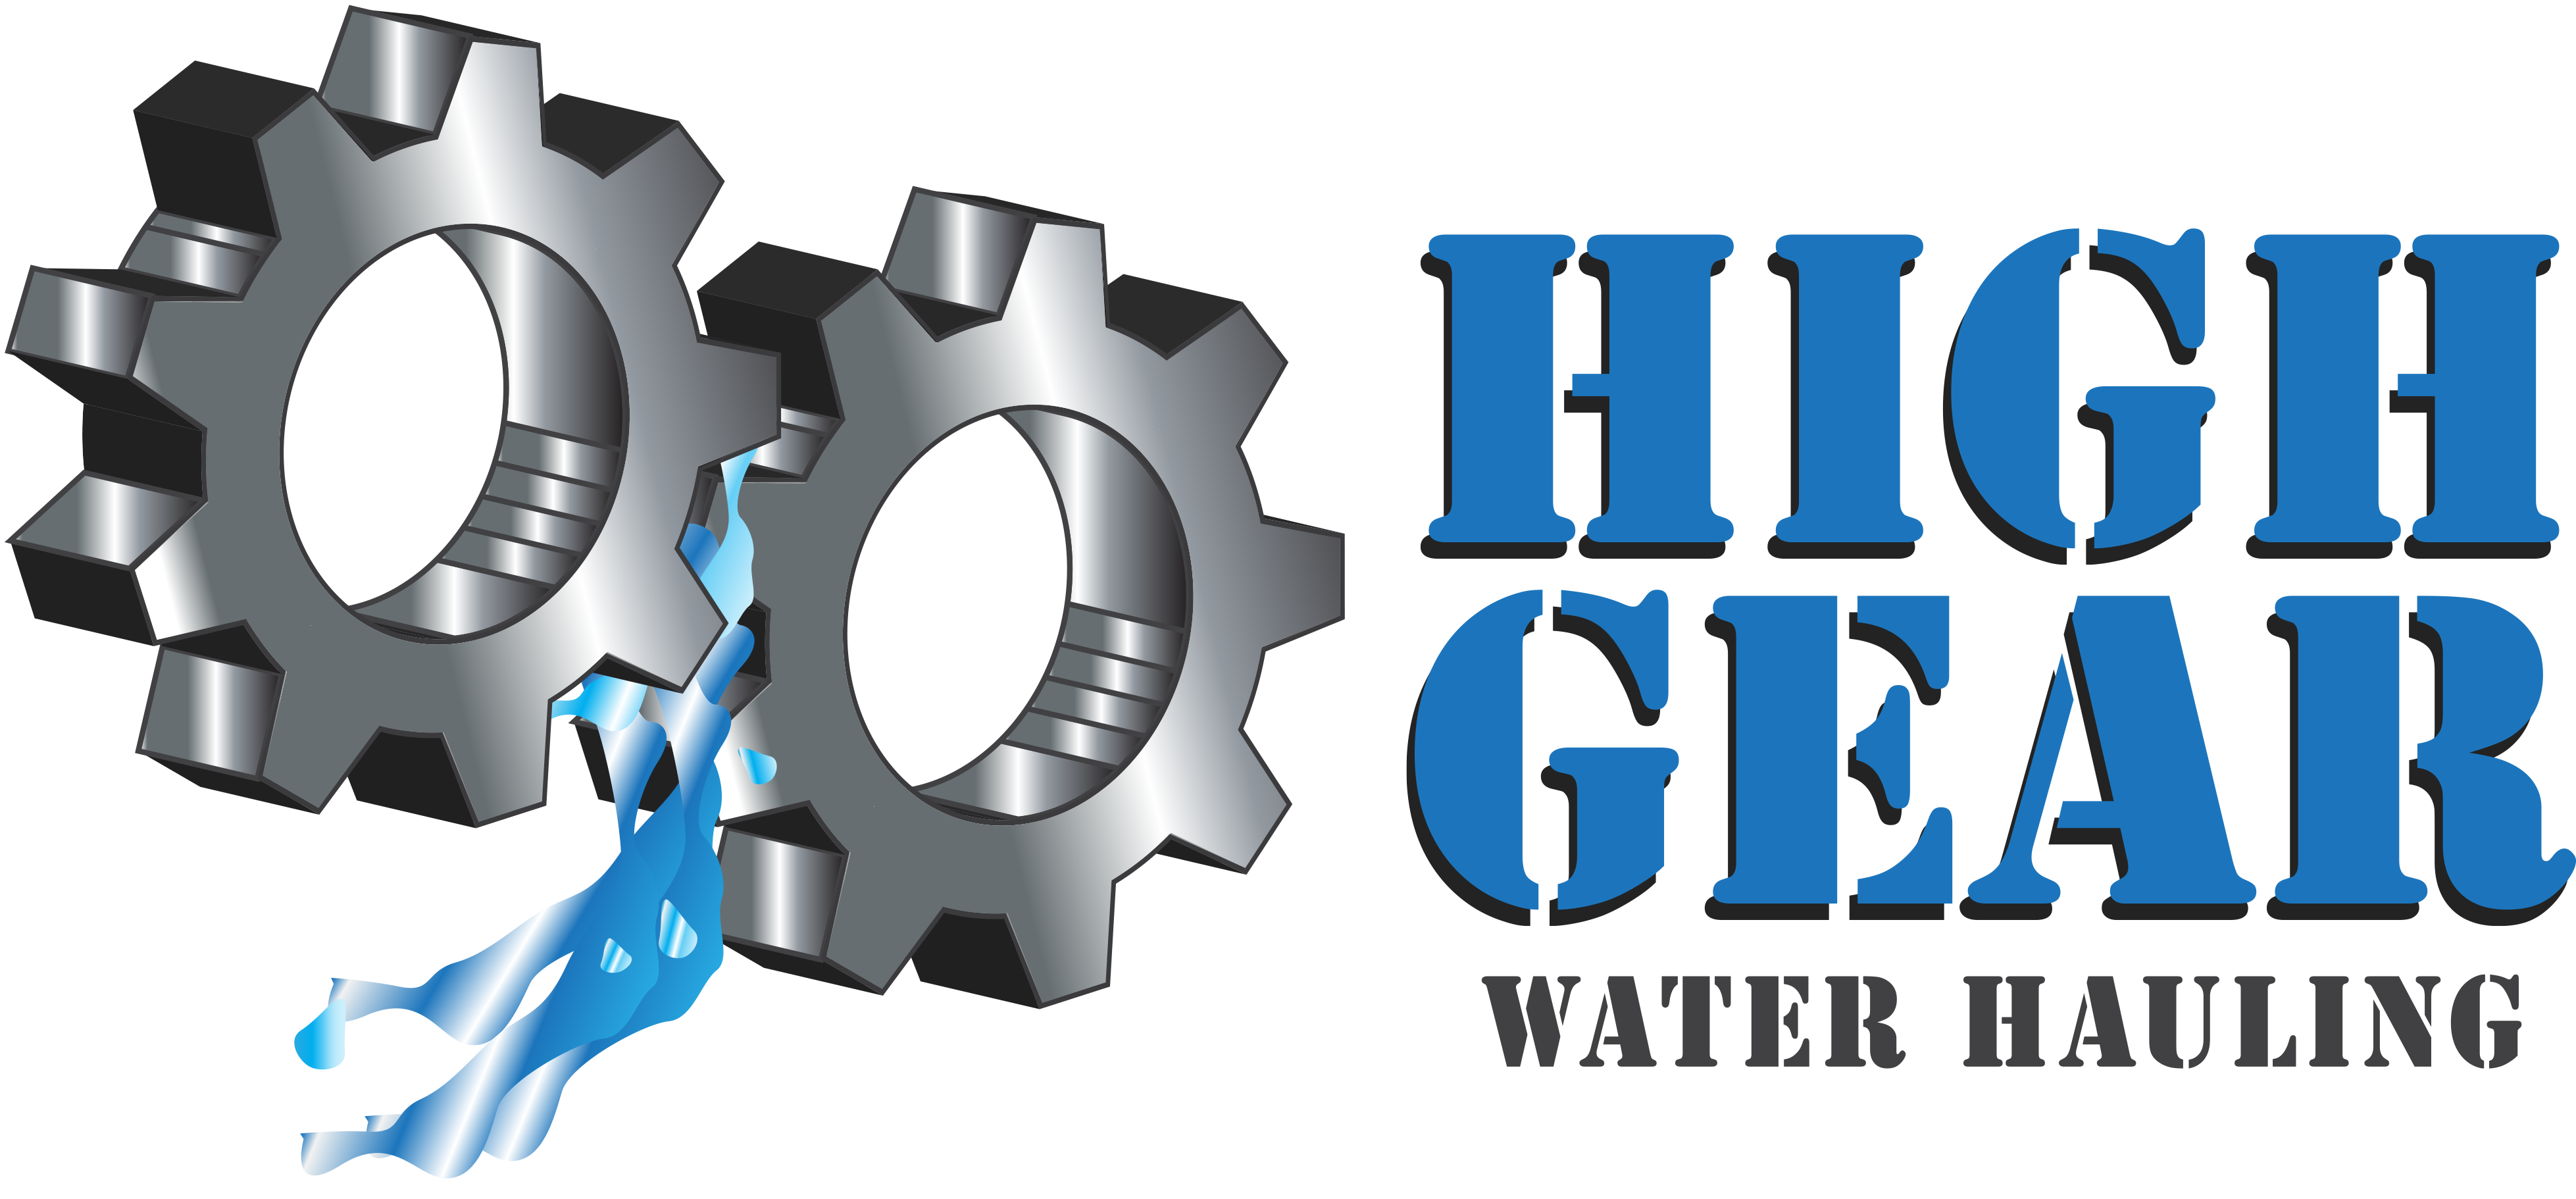 High Gear Water Hauling logo